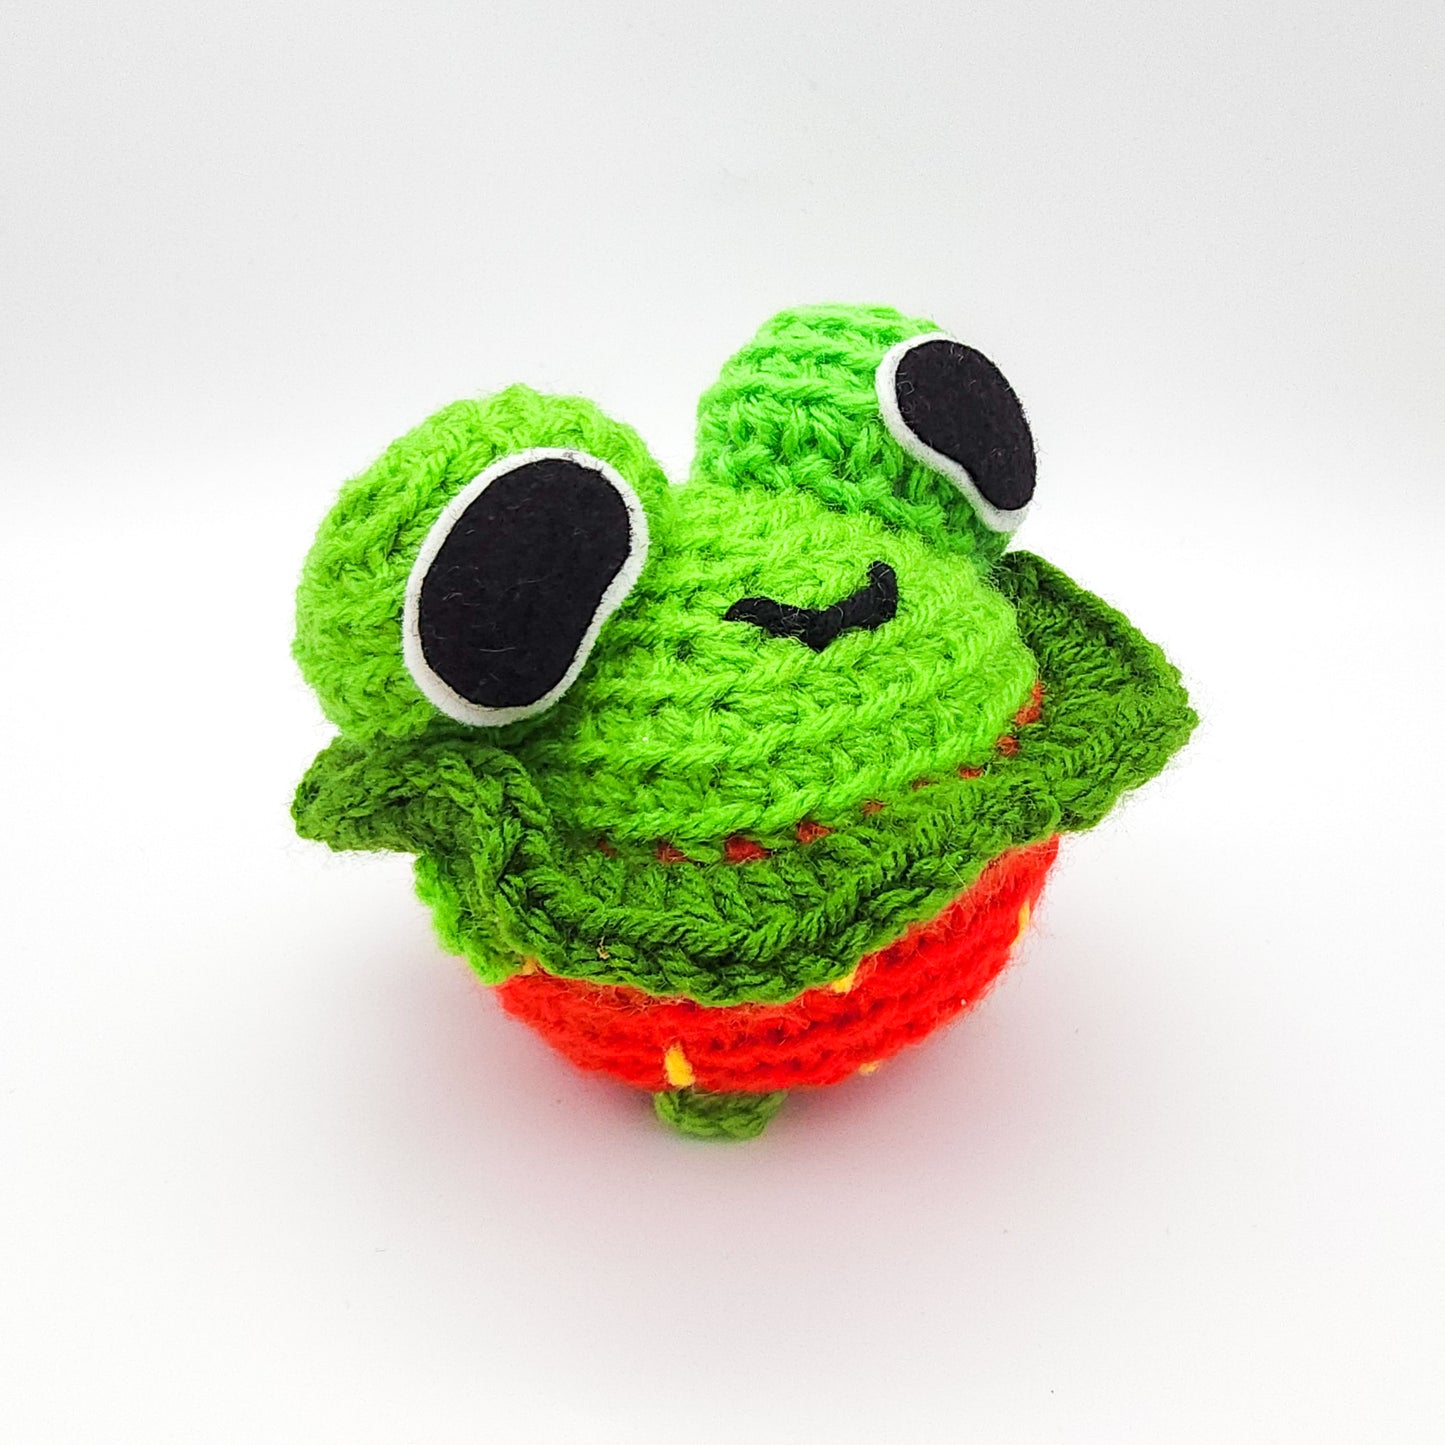 Strawberry Froggy Plush